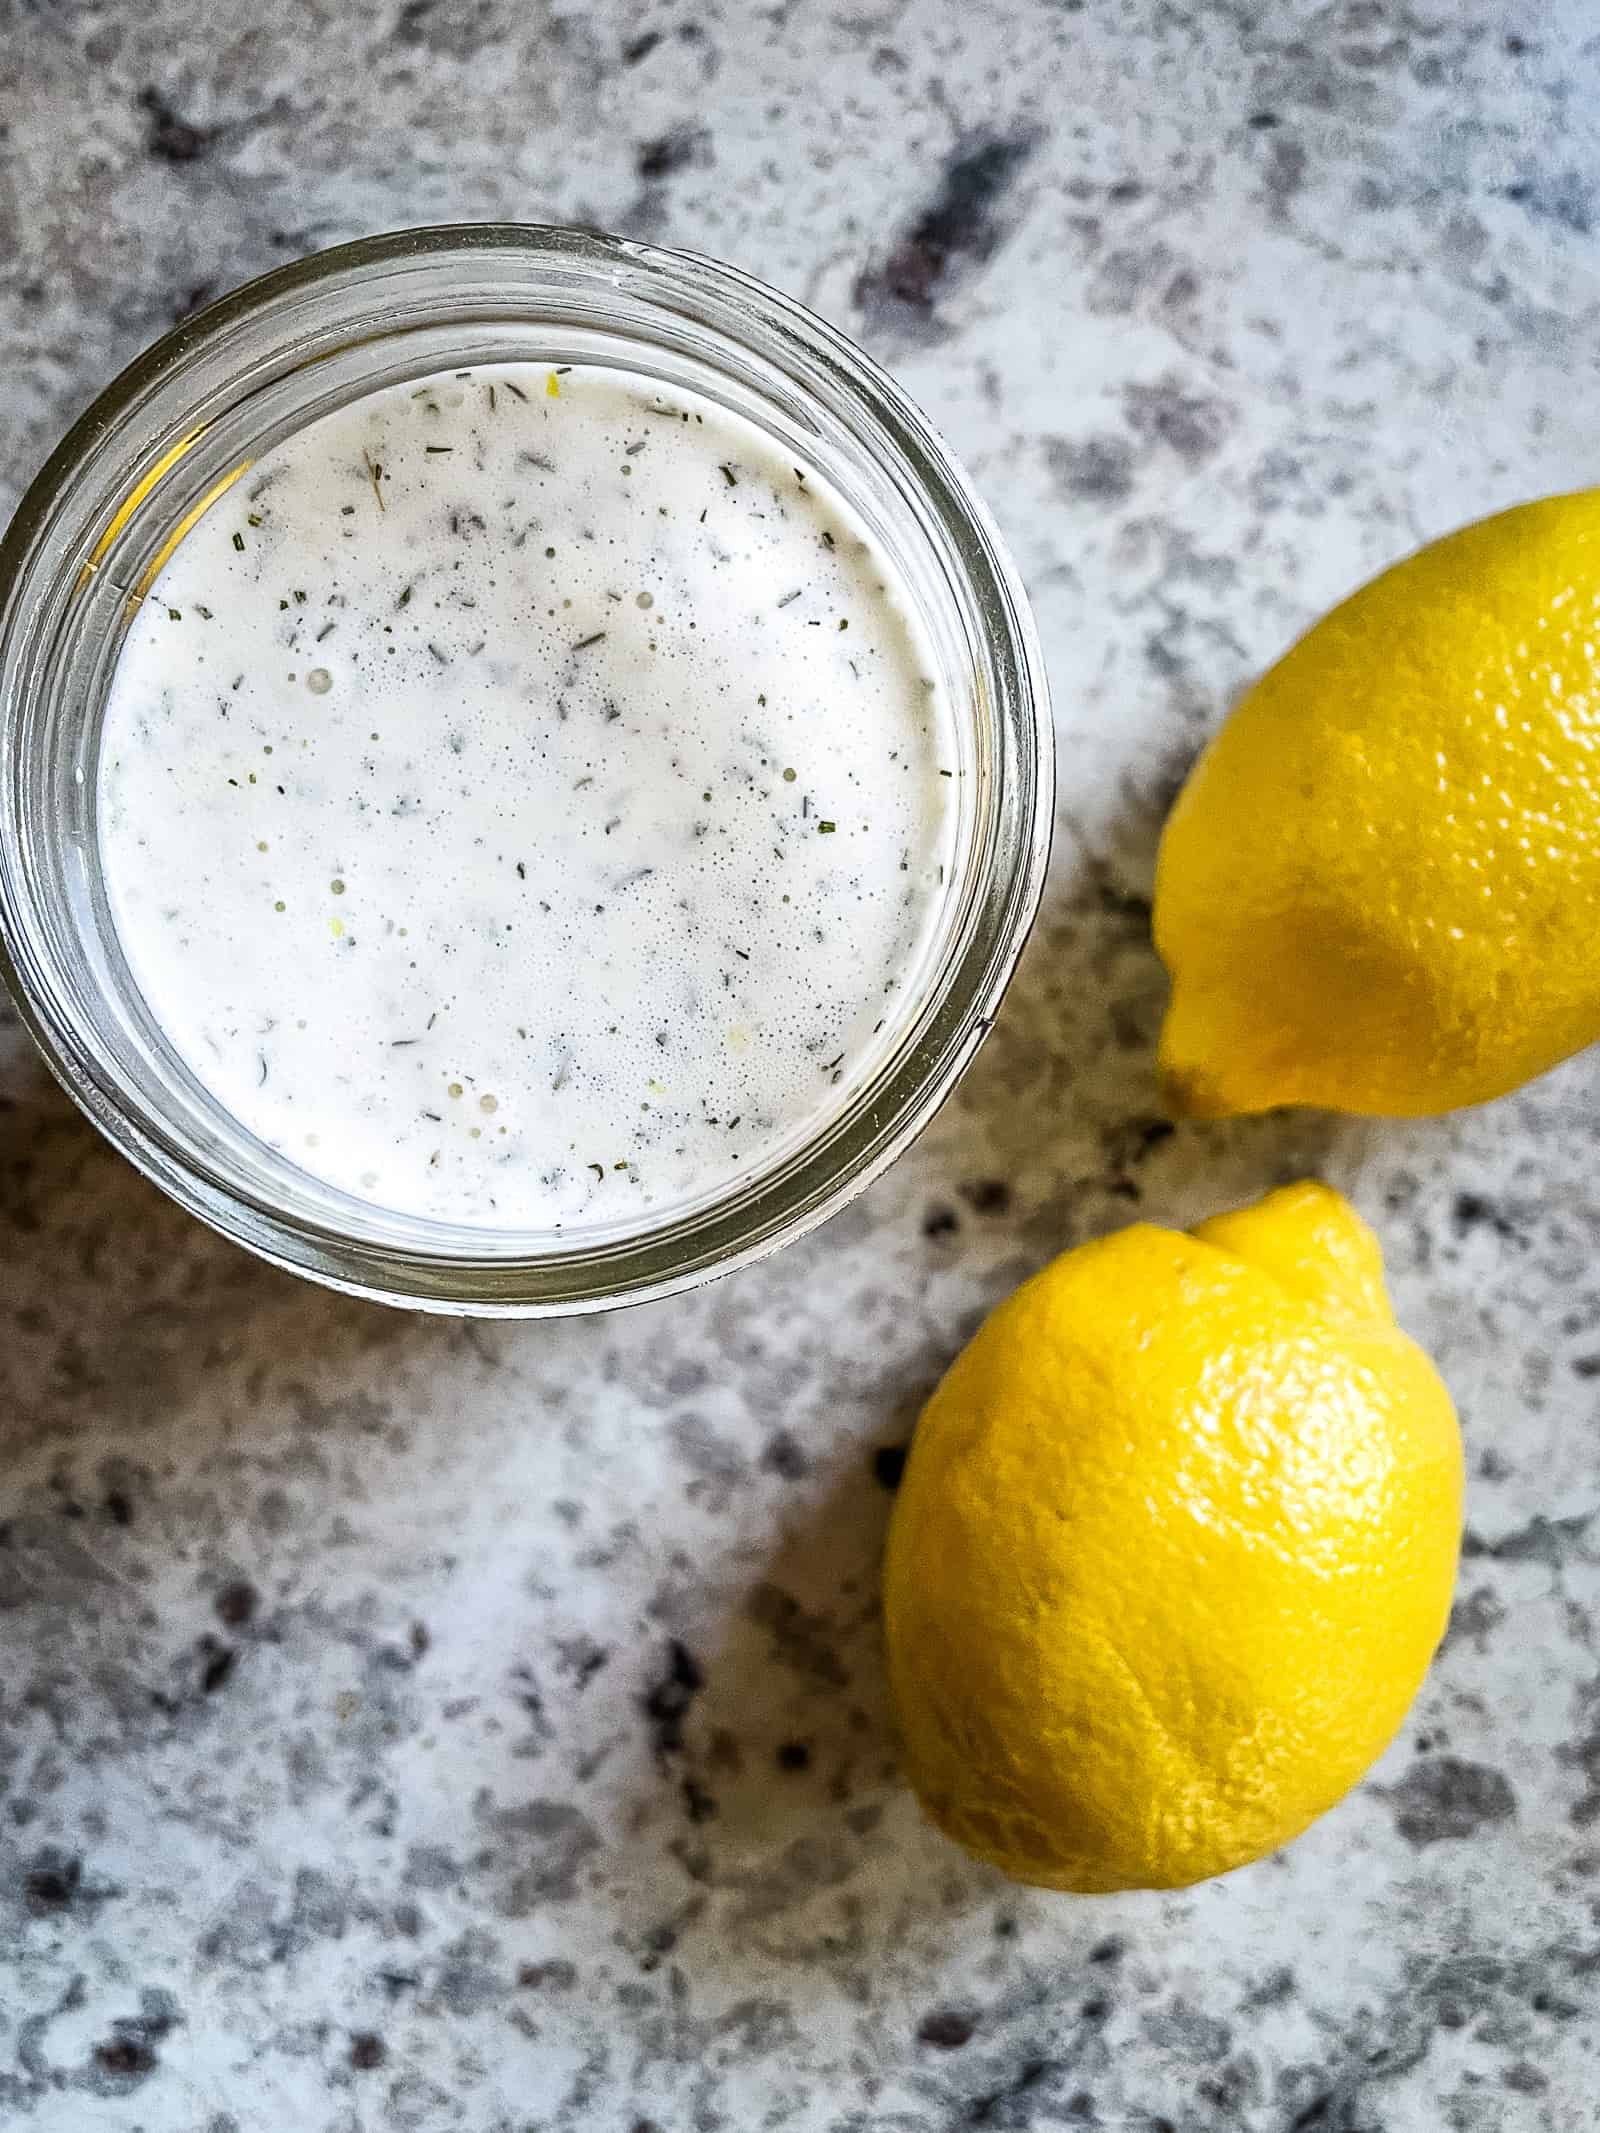 Creamy lemon pepper dressing in a jar. Two lemons are on the side.